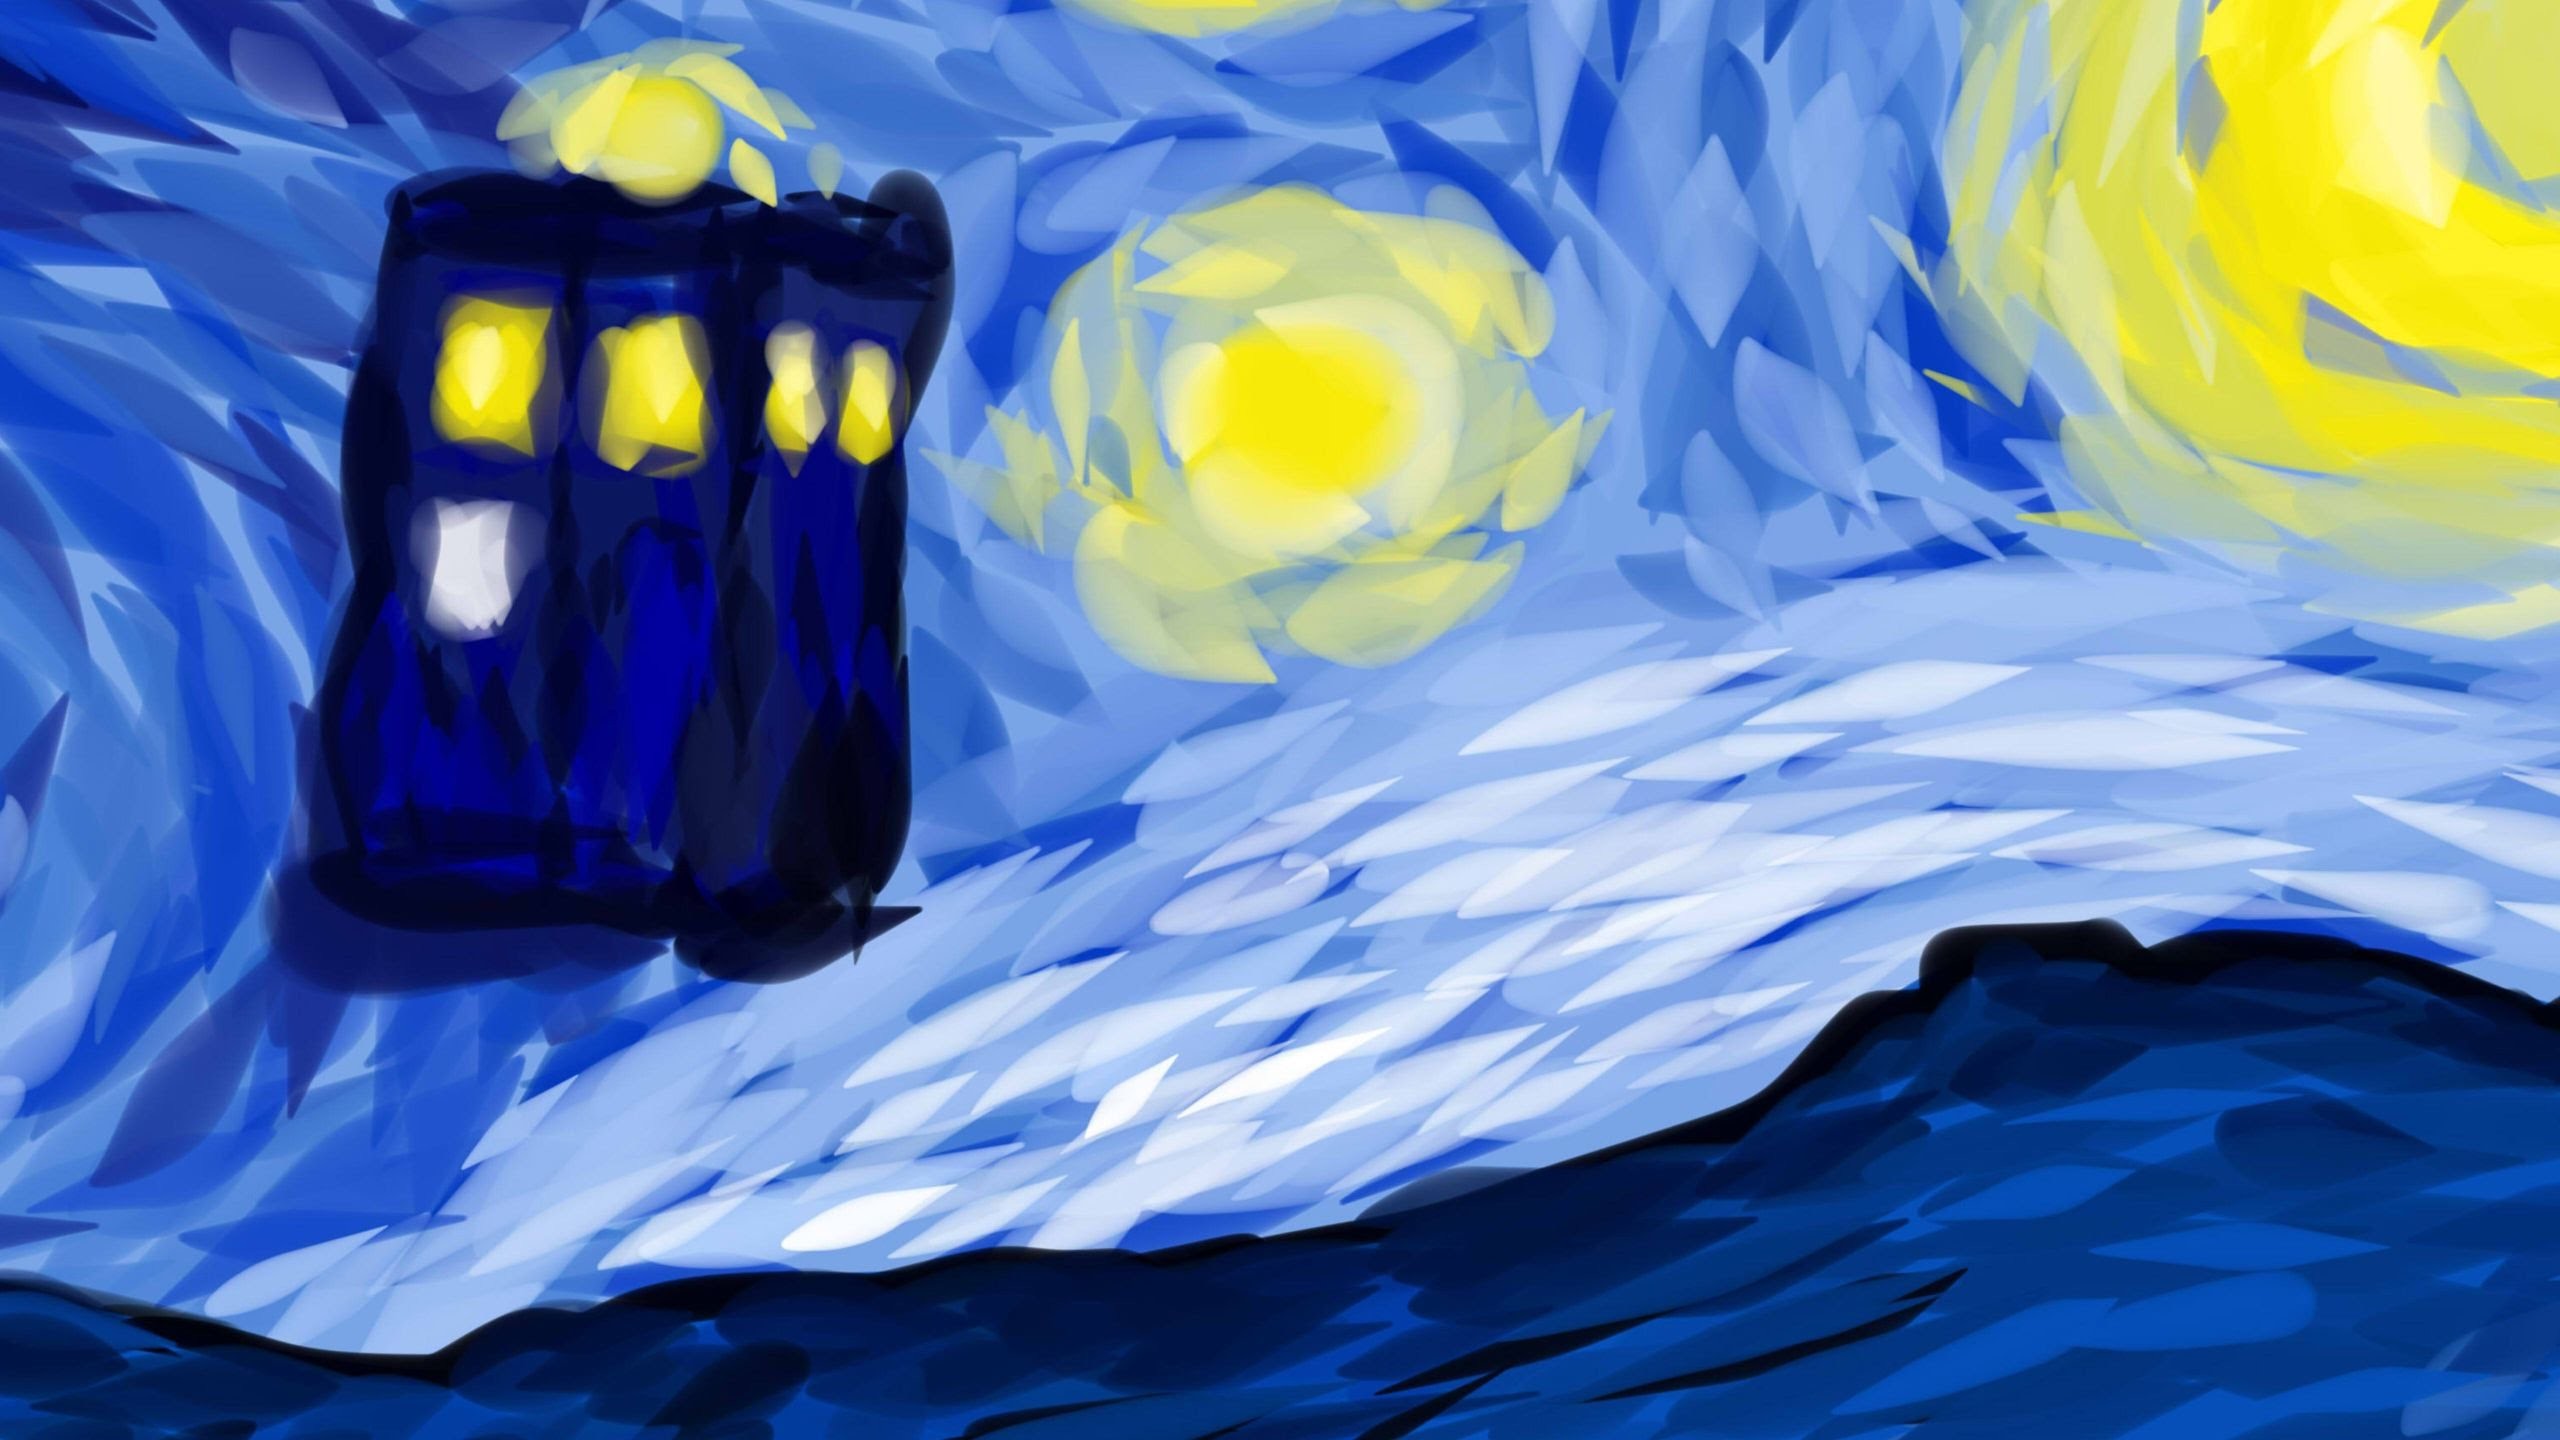 2560x1440 TARDIS - Vincent Van Gogh - Starry Night - Doctor Who Speed-art - YouTube